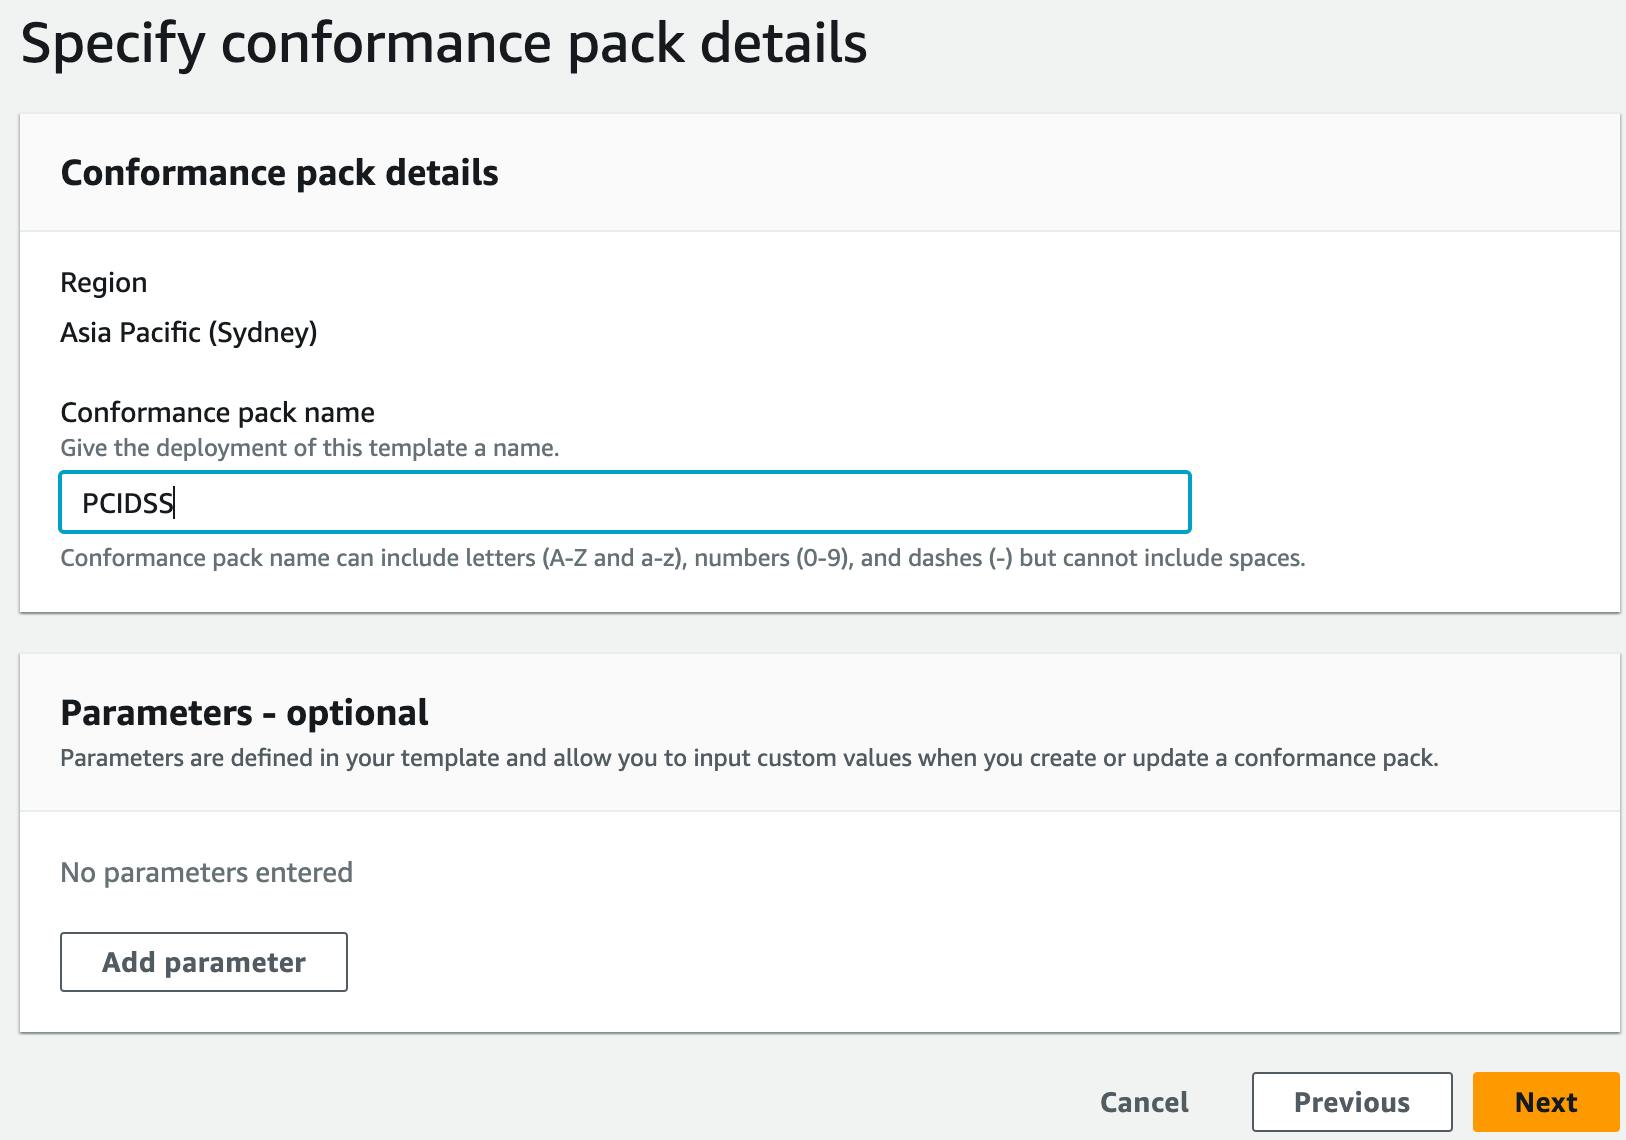 Specify conformance pack details